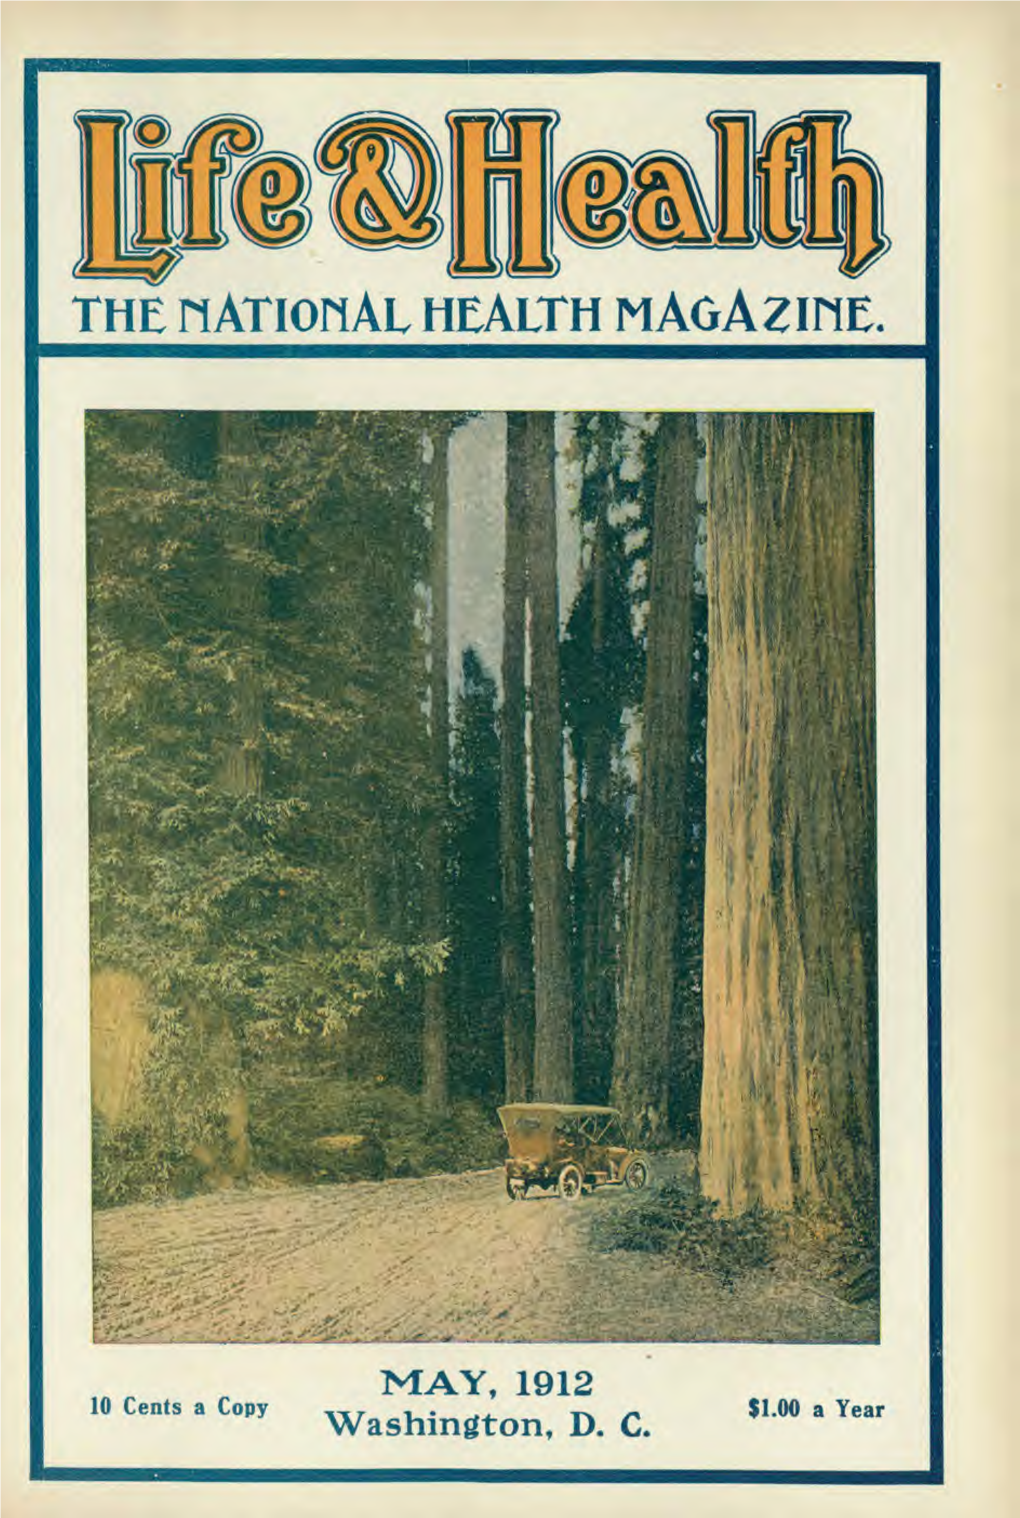 THE NATIONAL HEALTH Magazine